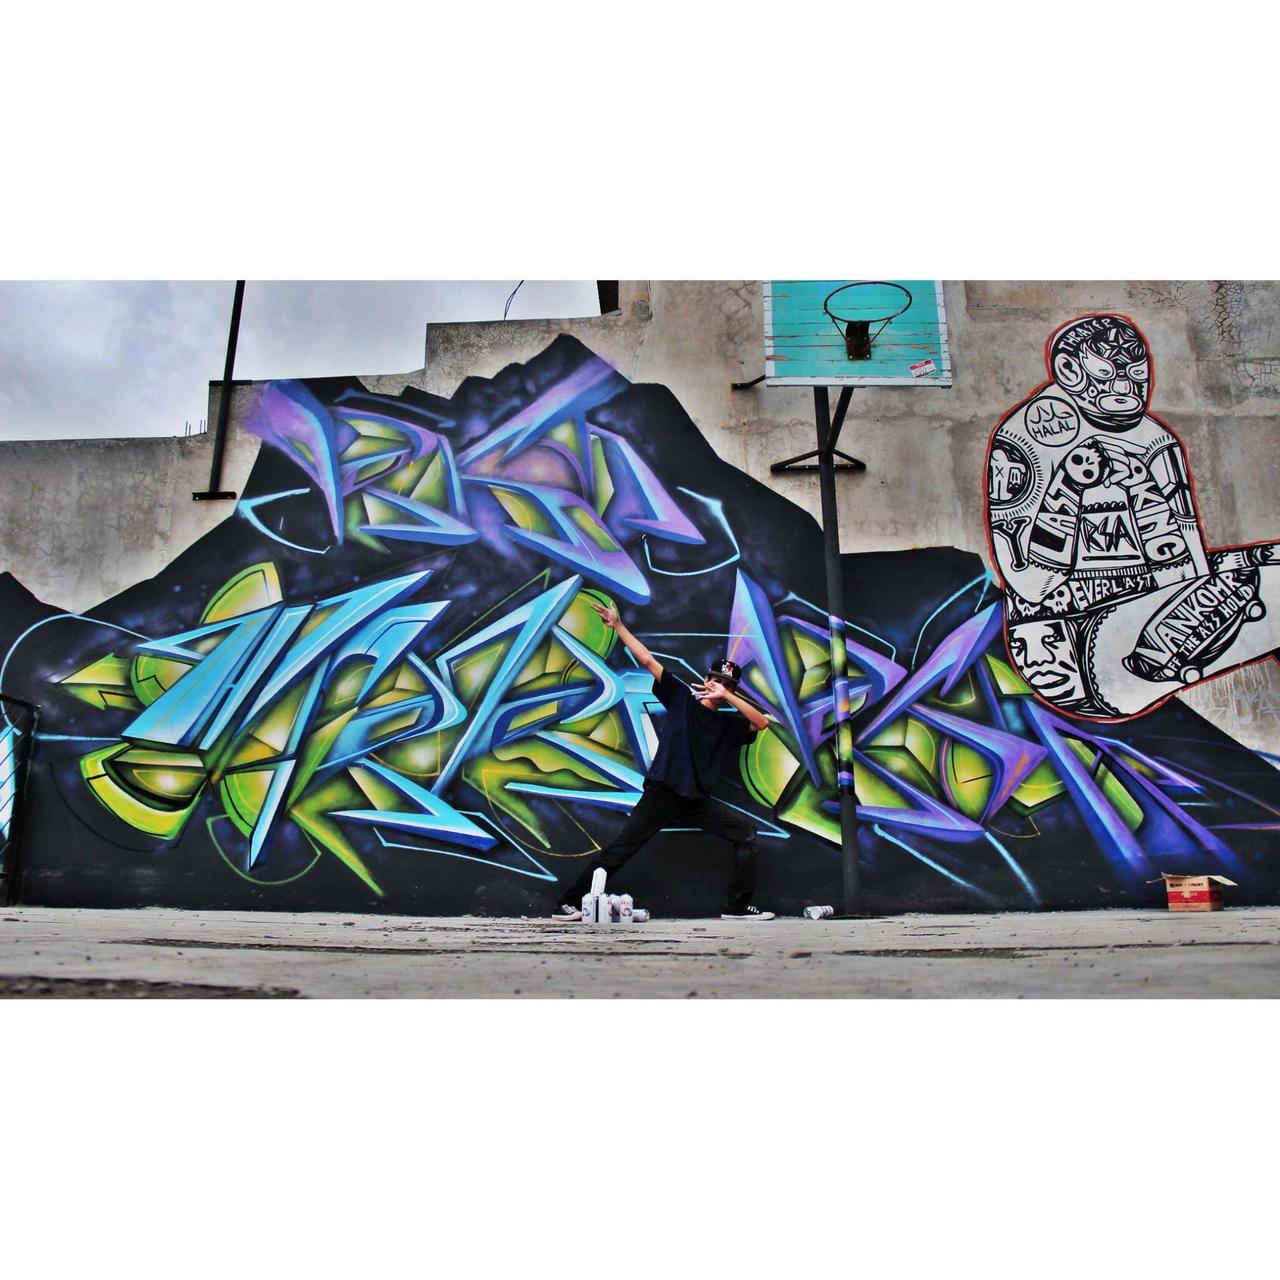 Harr IntuisiKru watchout for the video soon! #Graffiti #Street #Art #Klaten http://t.co/aNI7AFEoq6